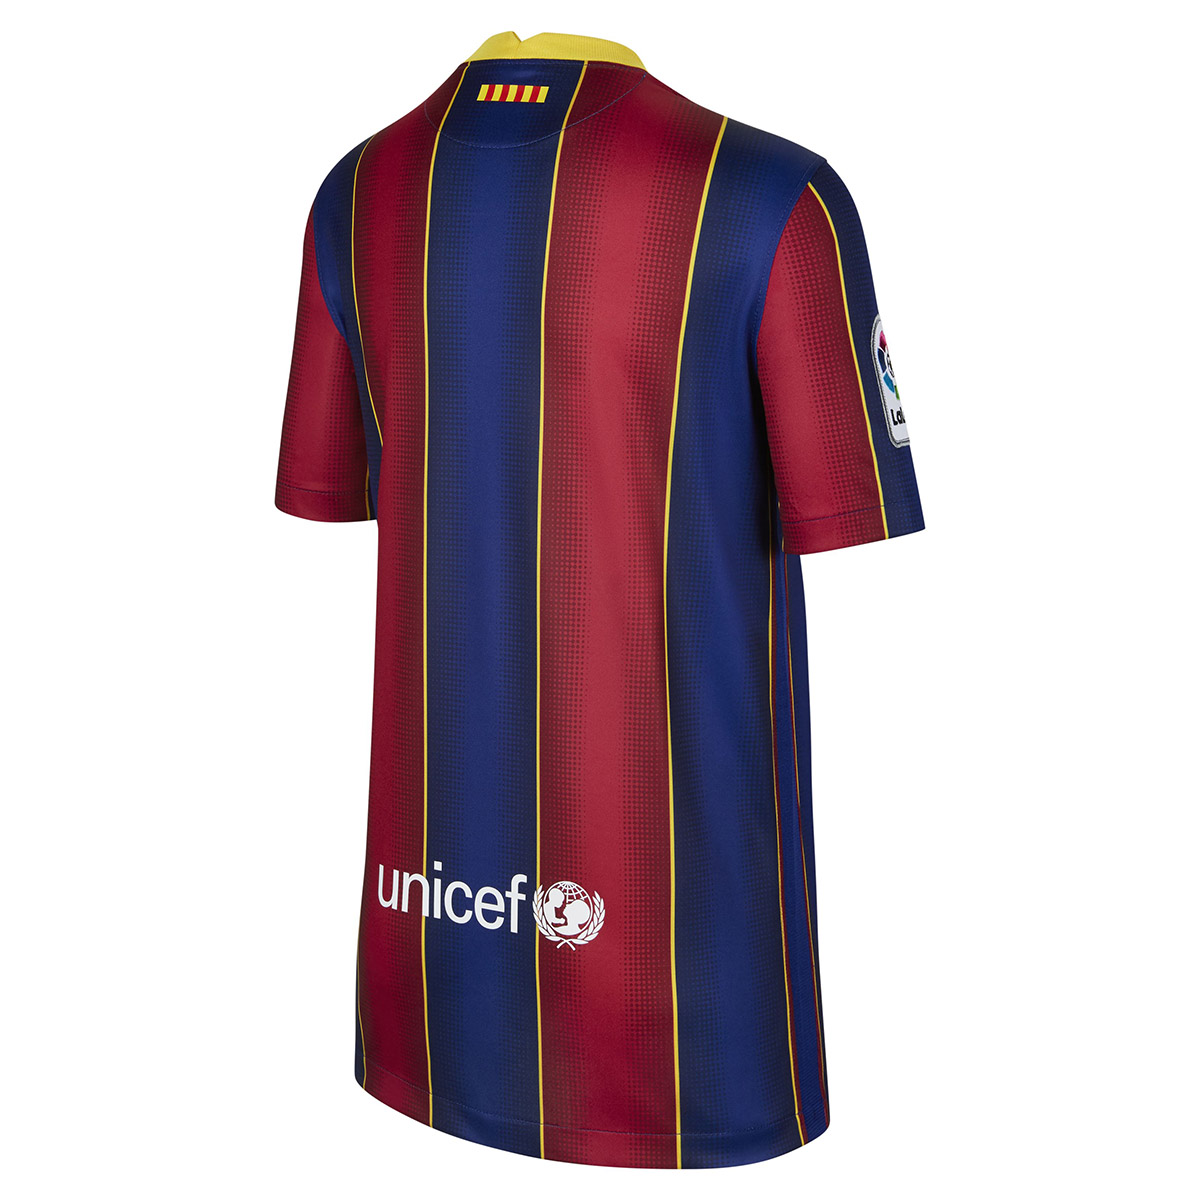 Camiseta Nike FC Barcelona Stadium Home 2021 Infantil,  image number null